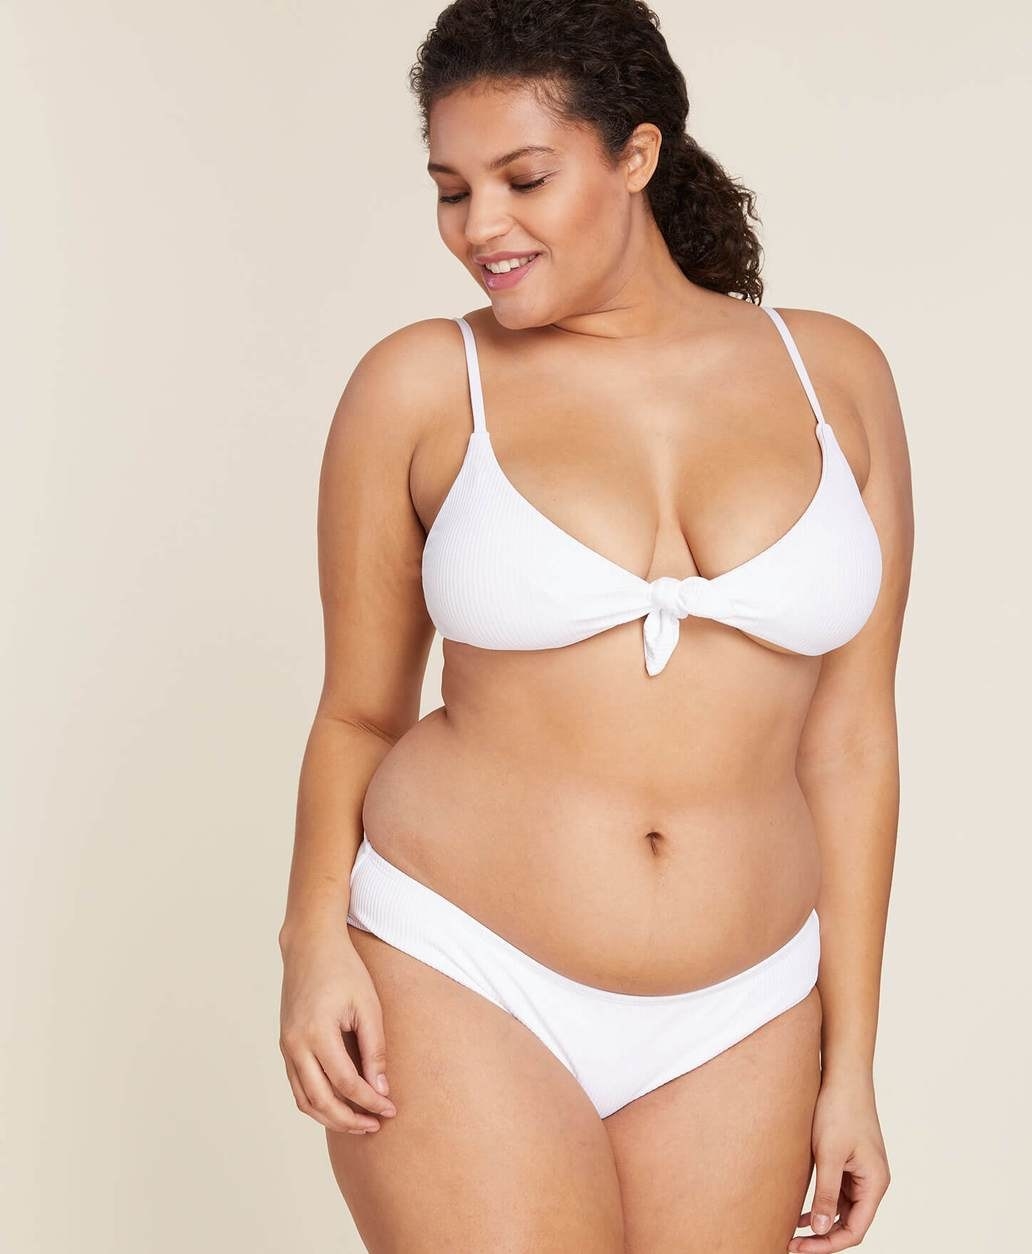 model wearing the white bikini top and bottom